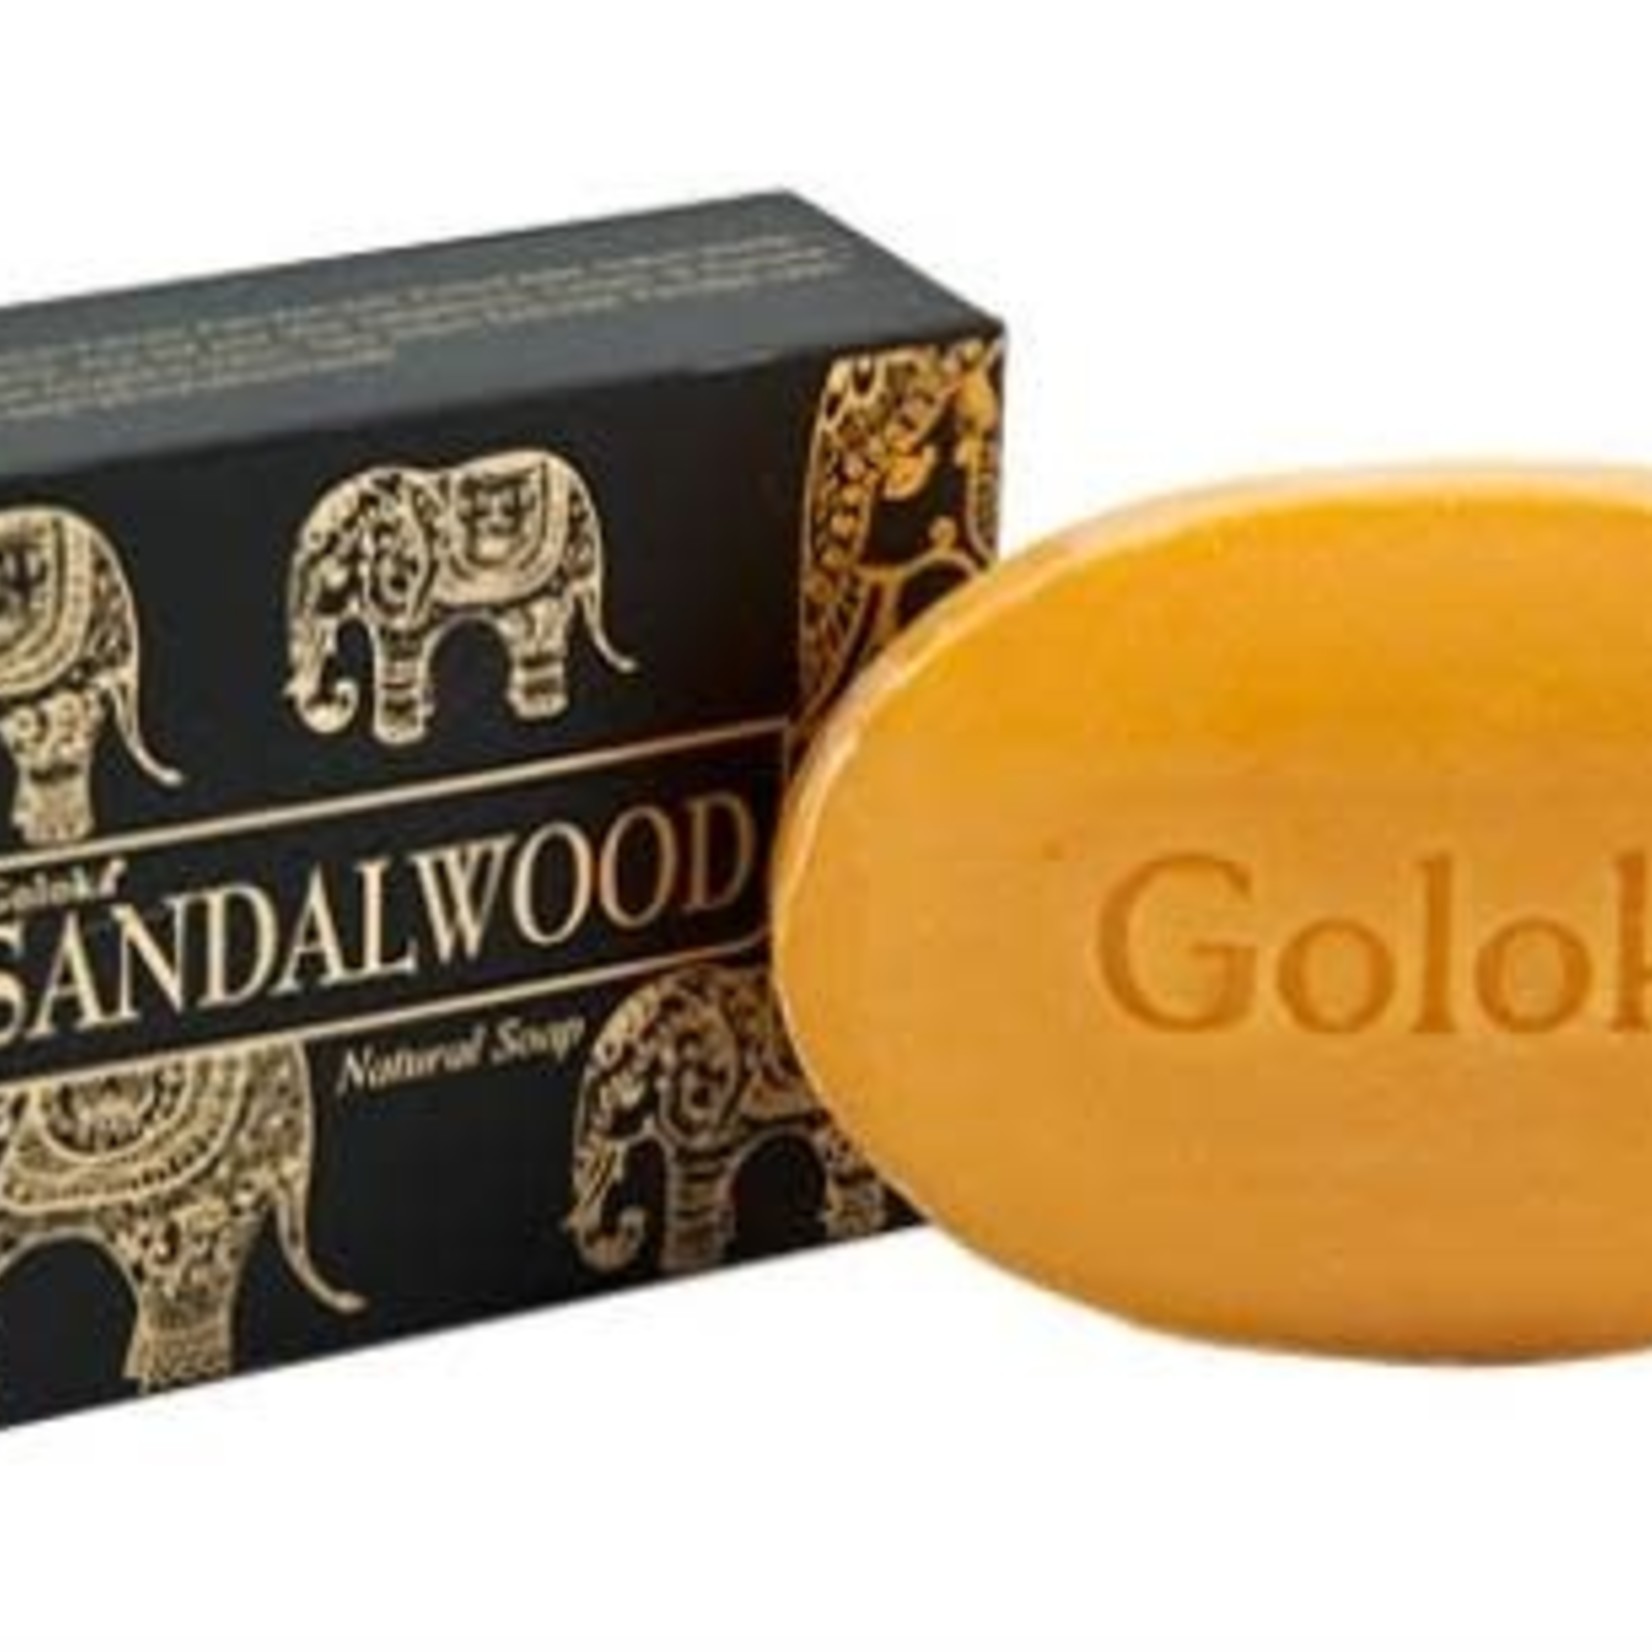 Sandalwood Soap (Goloka)